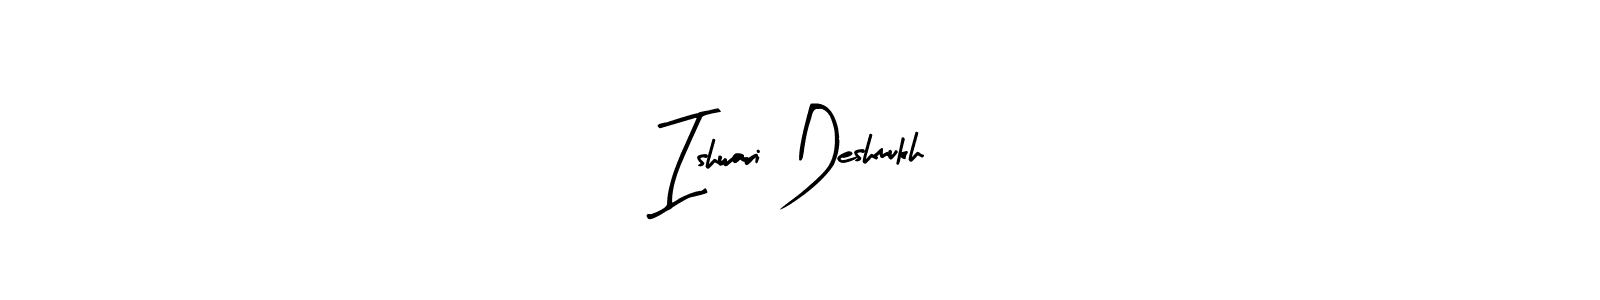 How to make Ishwari Deshmukh signature? Arty Signature is a professional autograph style. Create handwritten signature for Ishwari Deshmukh name. Ishwari Deshmukh signature style 8 images and pictures png